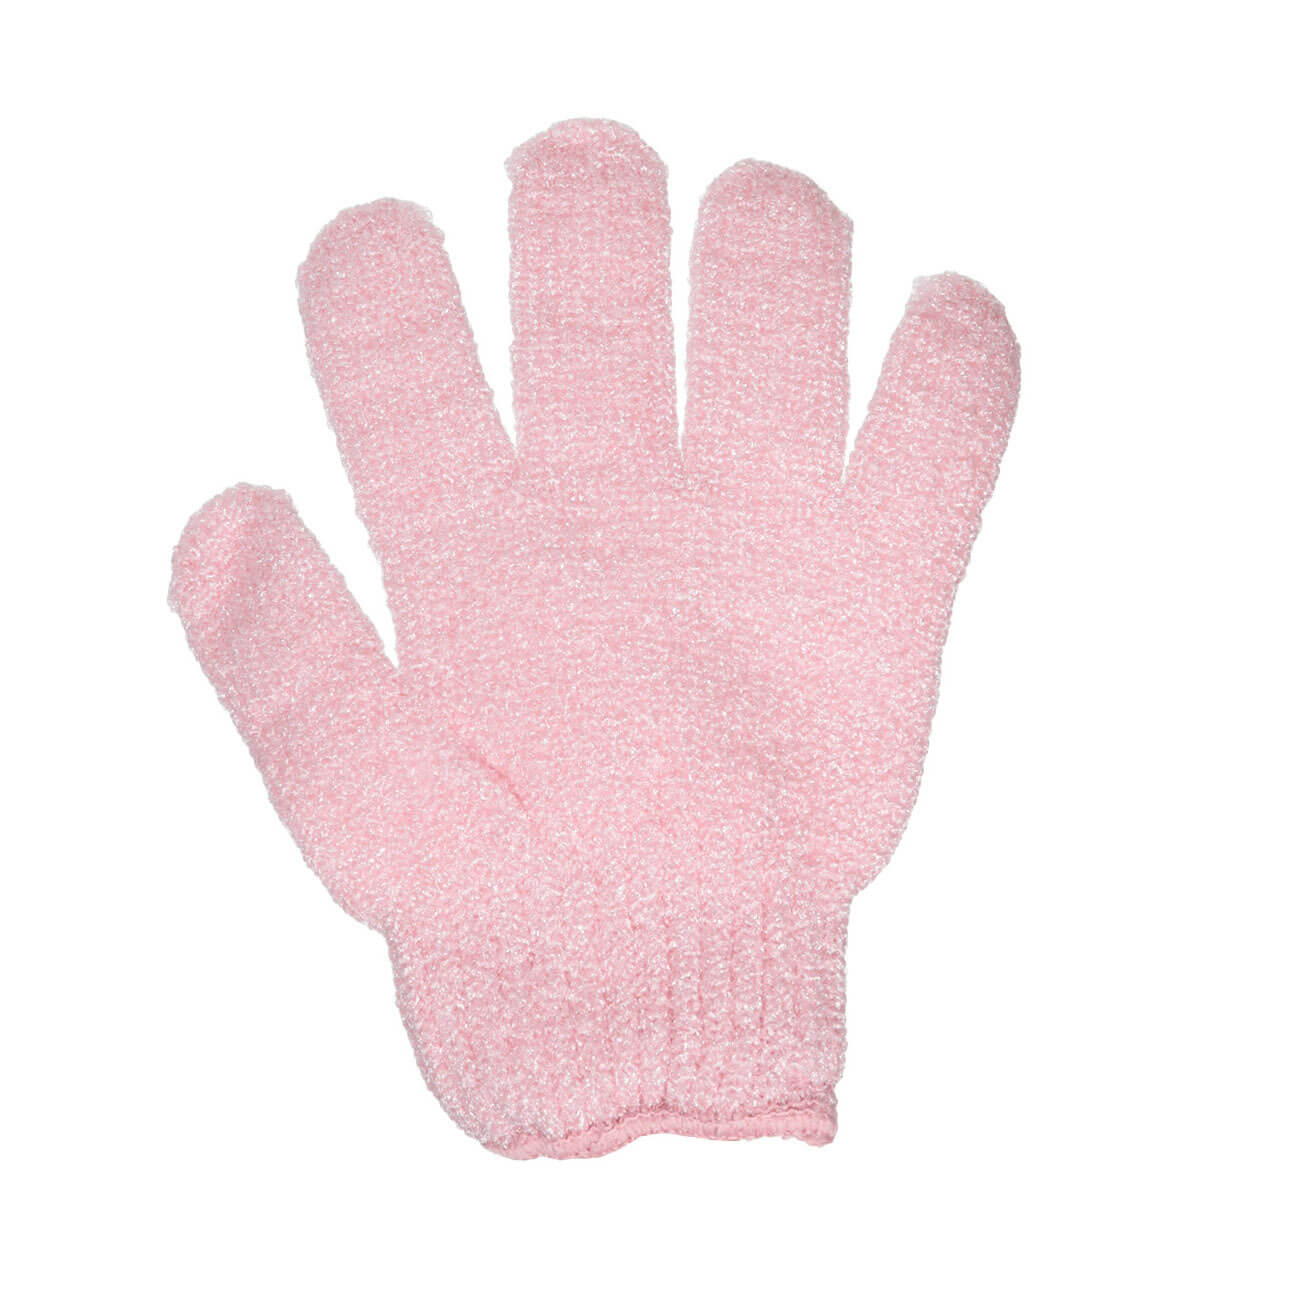 Перчатка для мытья тела, 19 см, 2 шт, нейлон, пудровая, Gentle spa мочалка перчатка полосатик